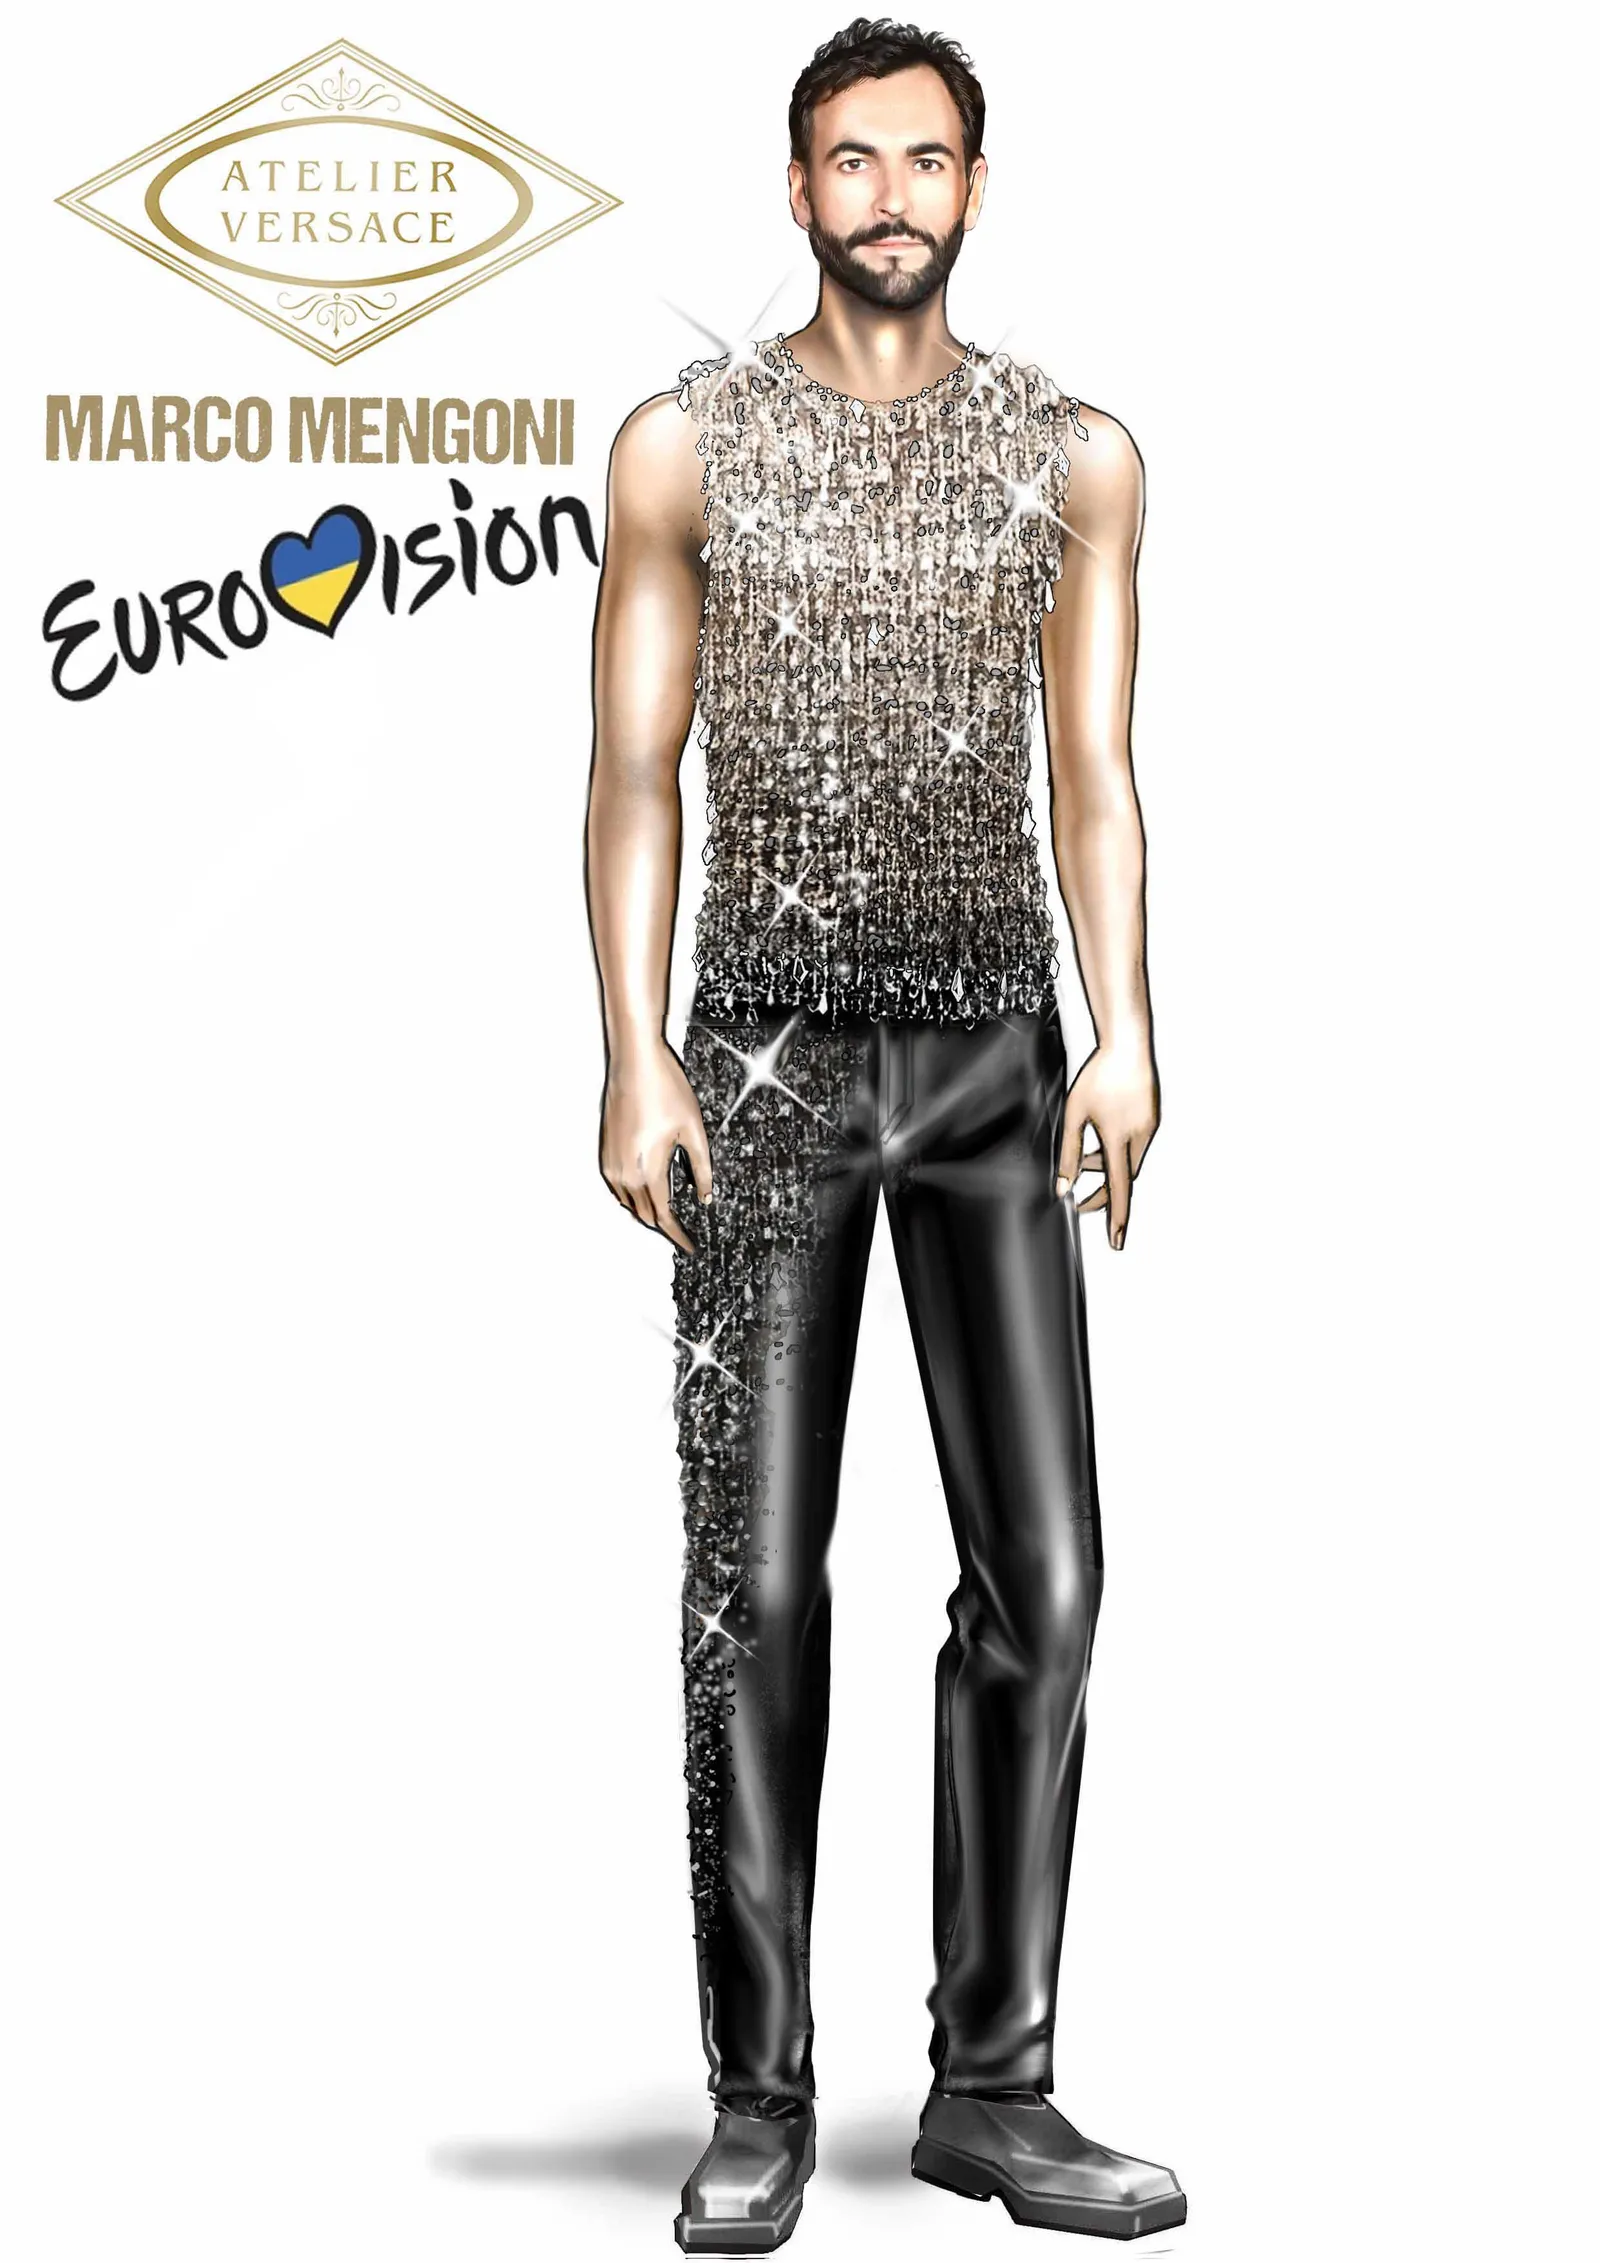 marco mengoni final dress eurovision 2023 dress look stylist